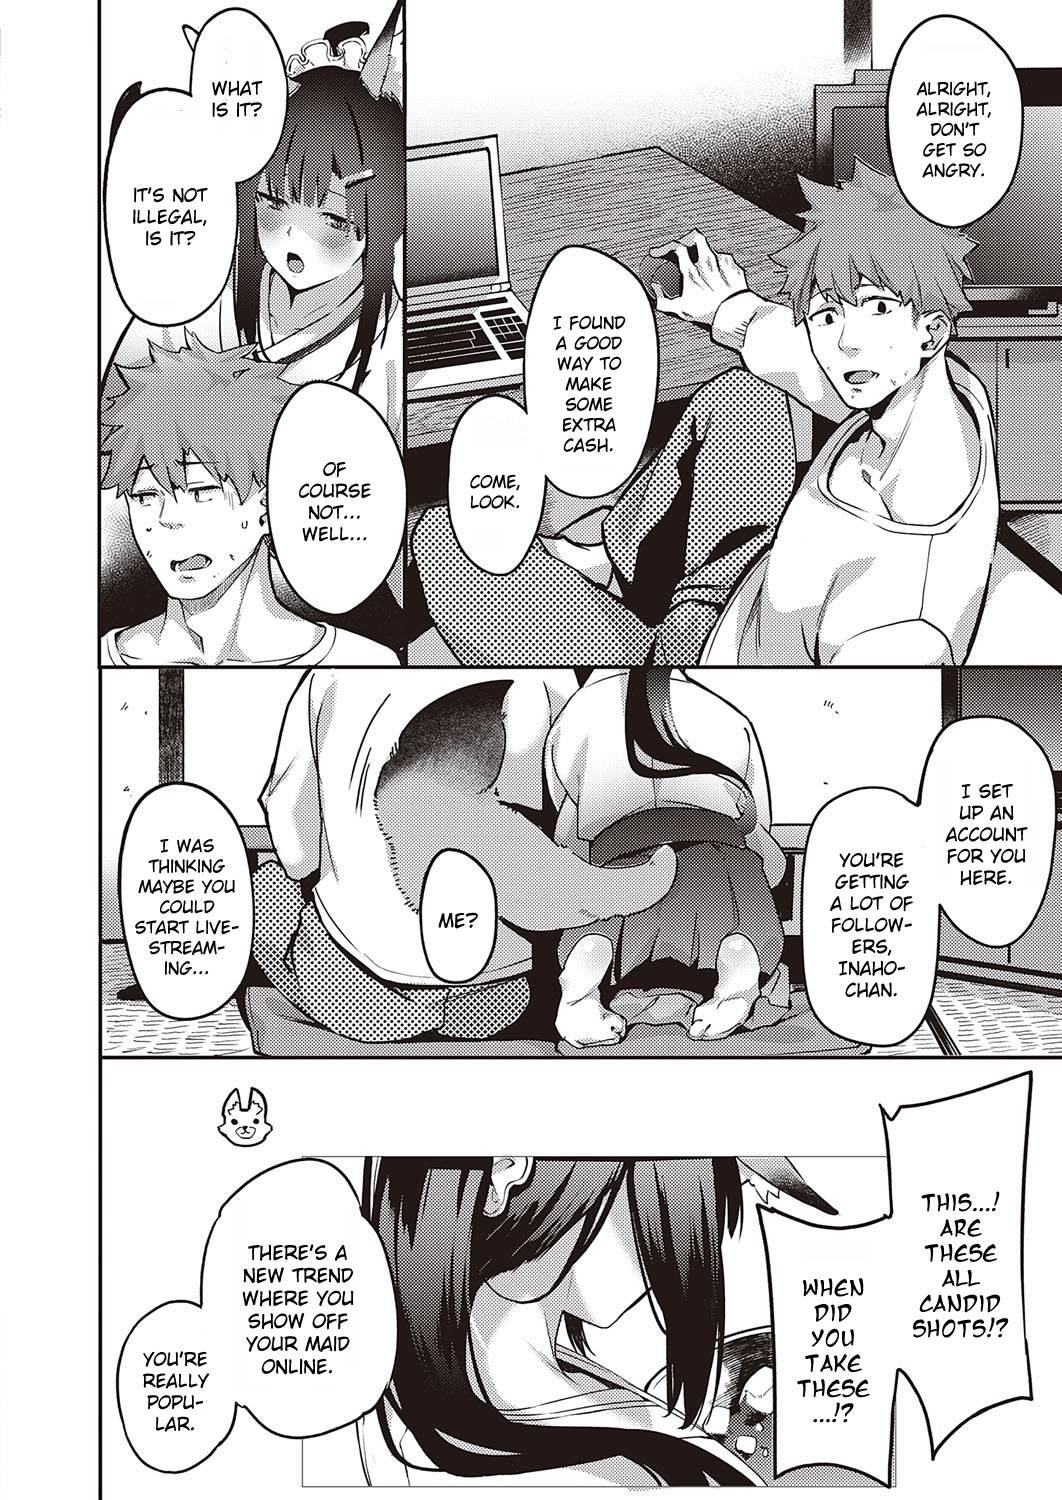 Daring Ometsuke Kitsune Inaho-chan Butts - Page 2